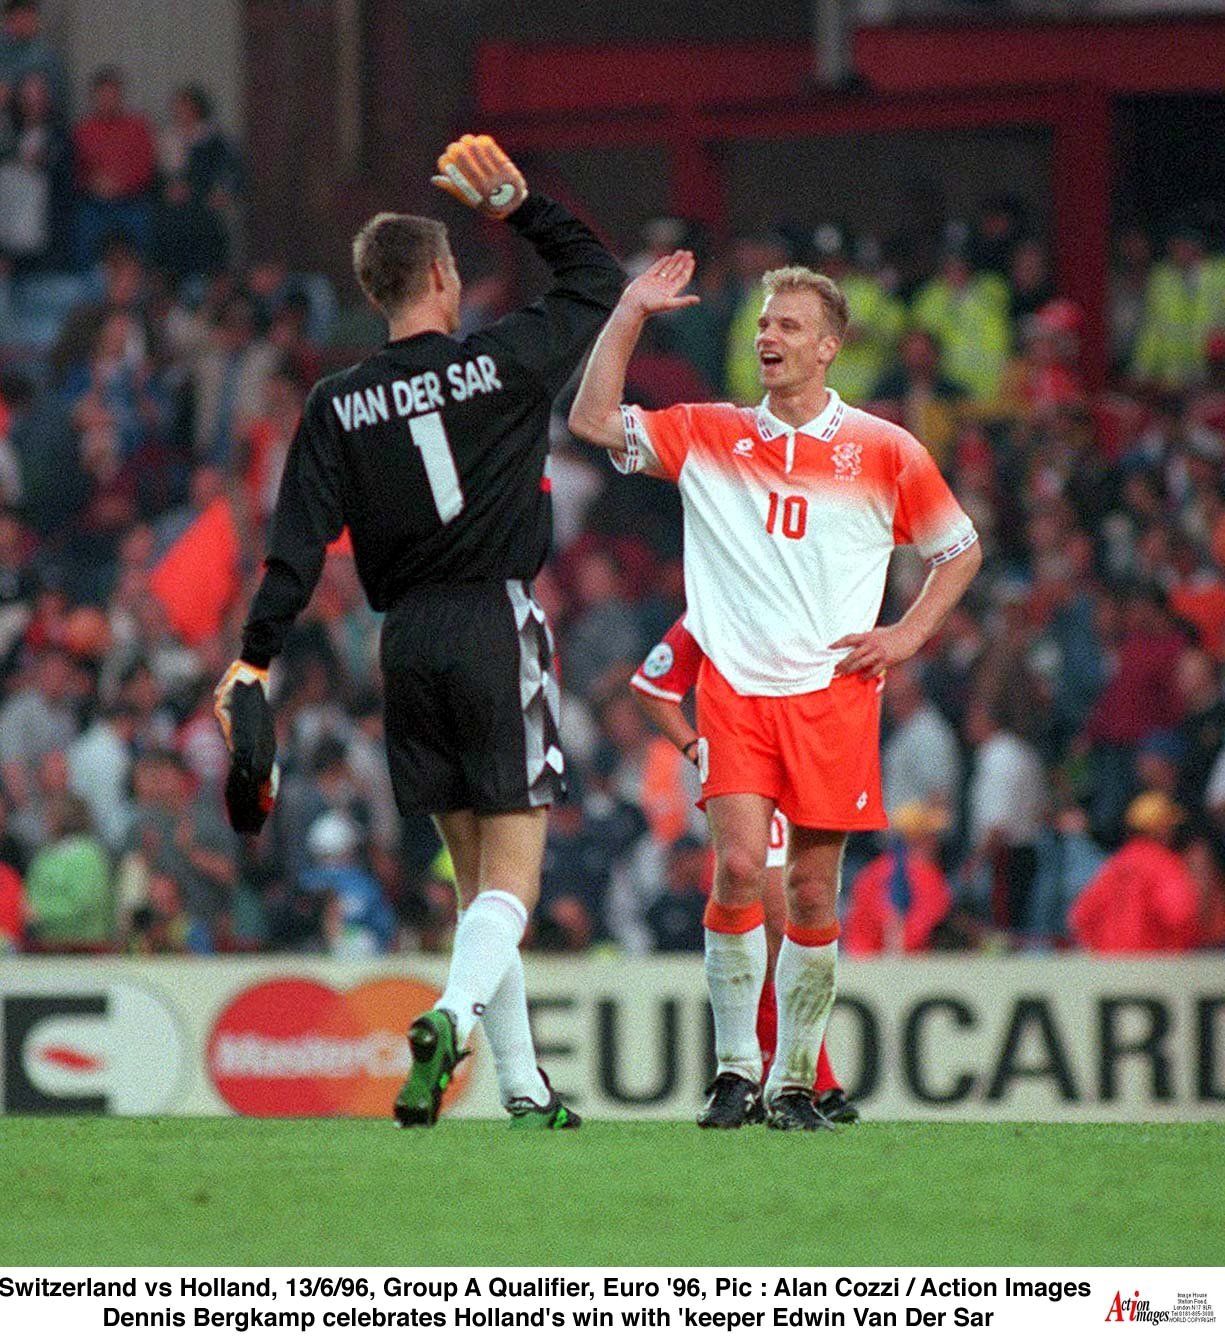 Dennis Bergkamp and Edwin van der Sar in action for Holland